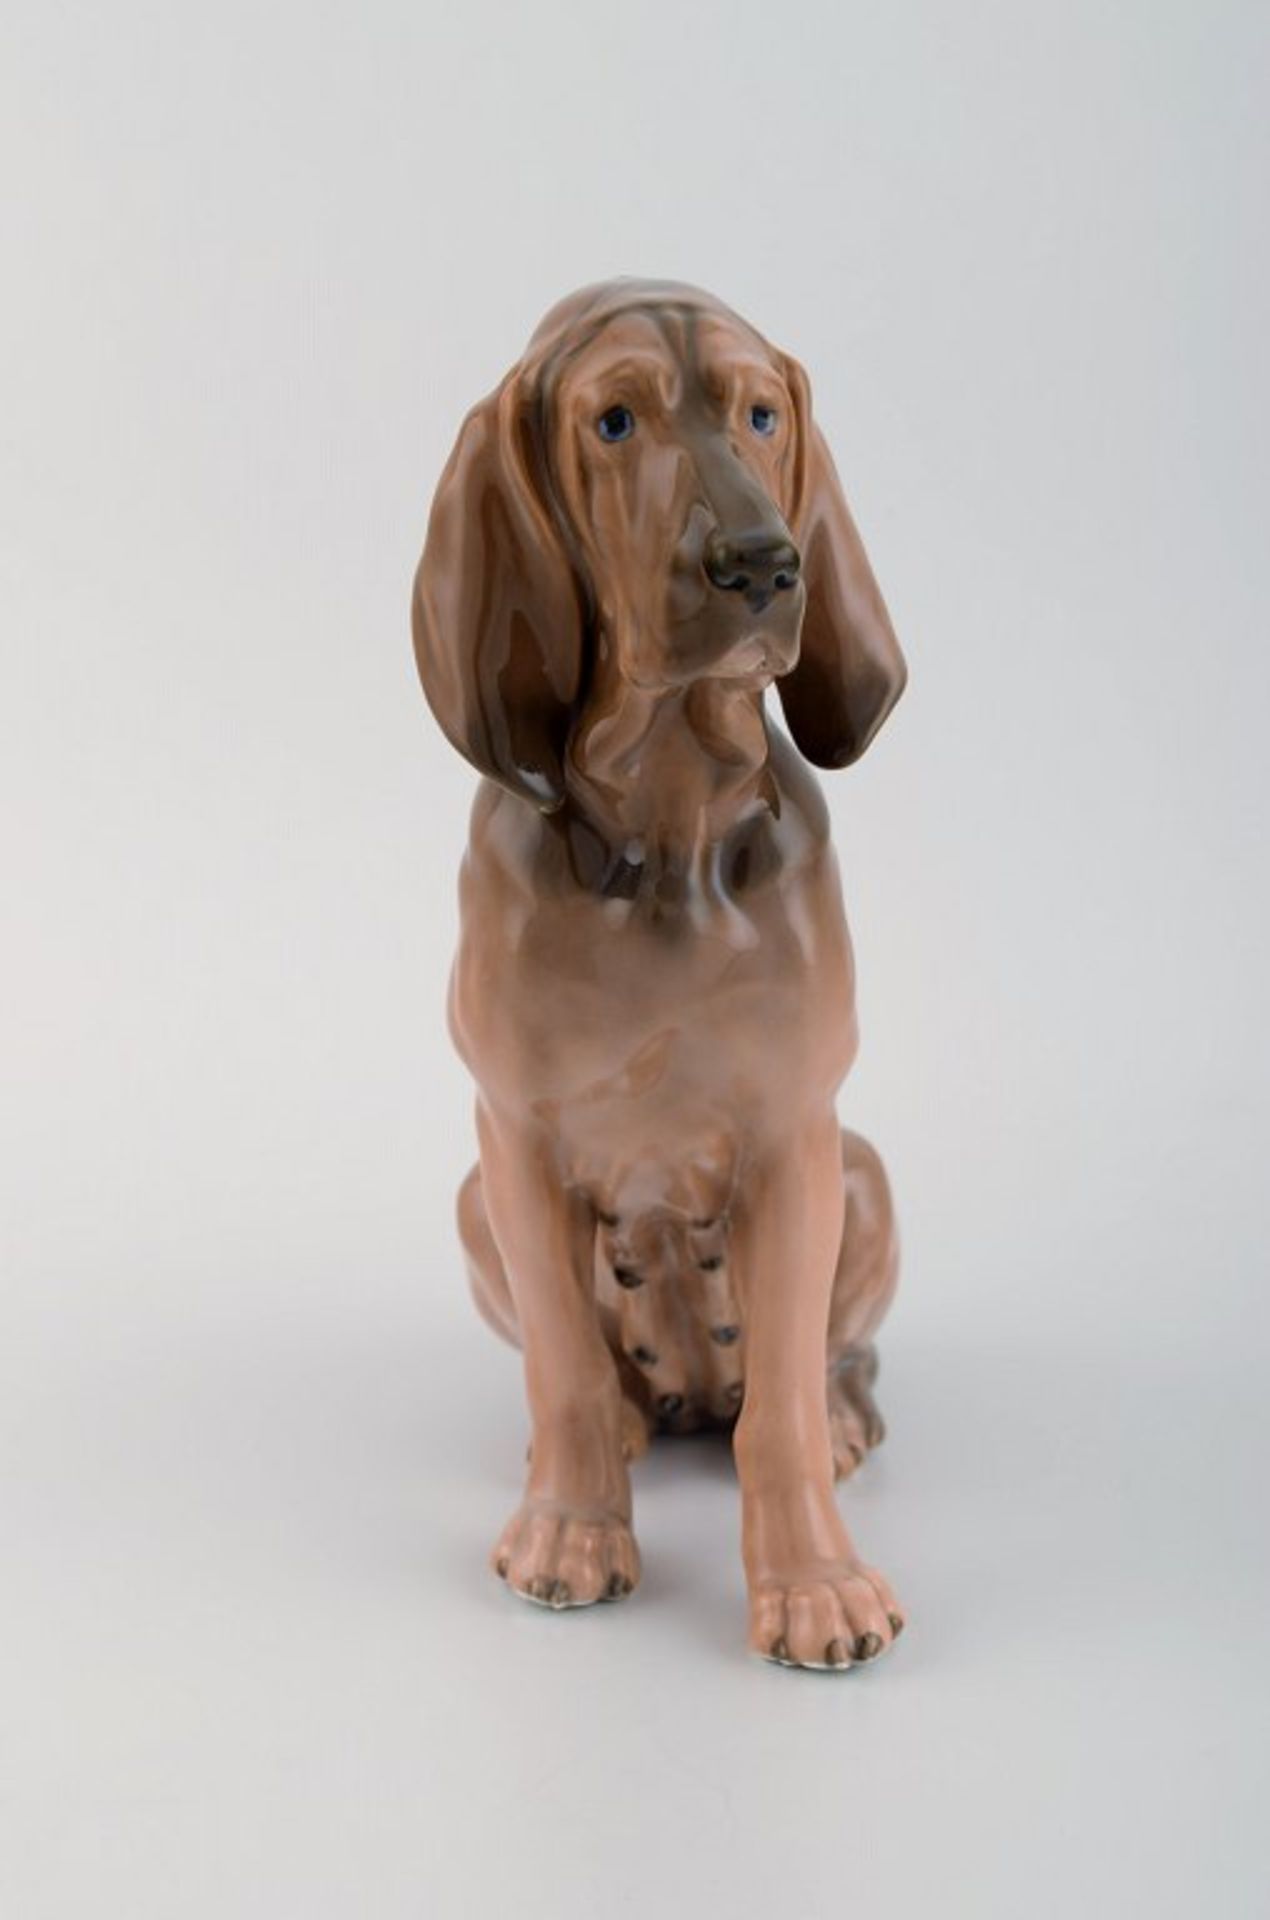 Royal Copenhagen Porzellanfigur. Bloodhound / Bluthund. Modell 1322. 1920's. I.W. H. 23cm.